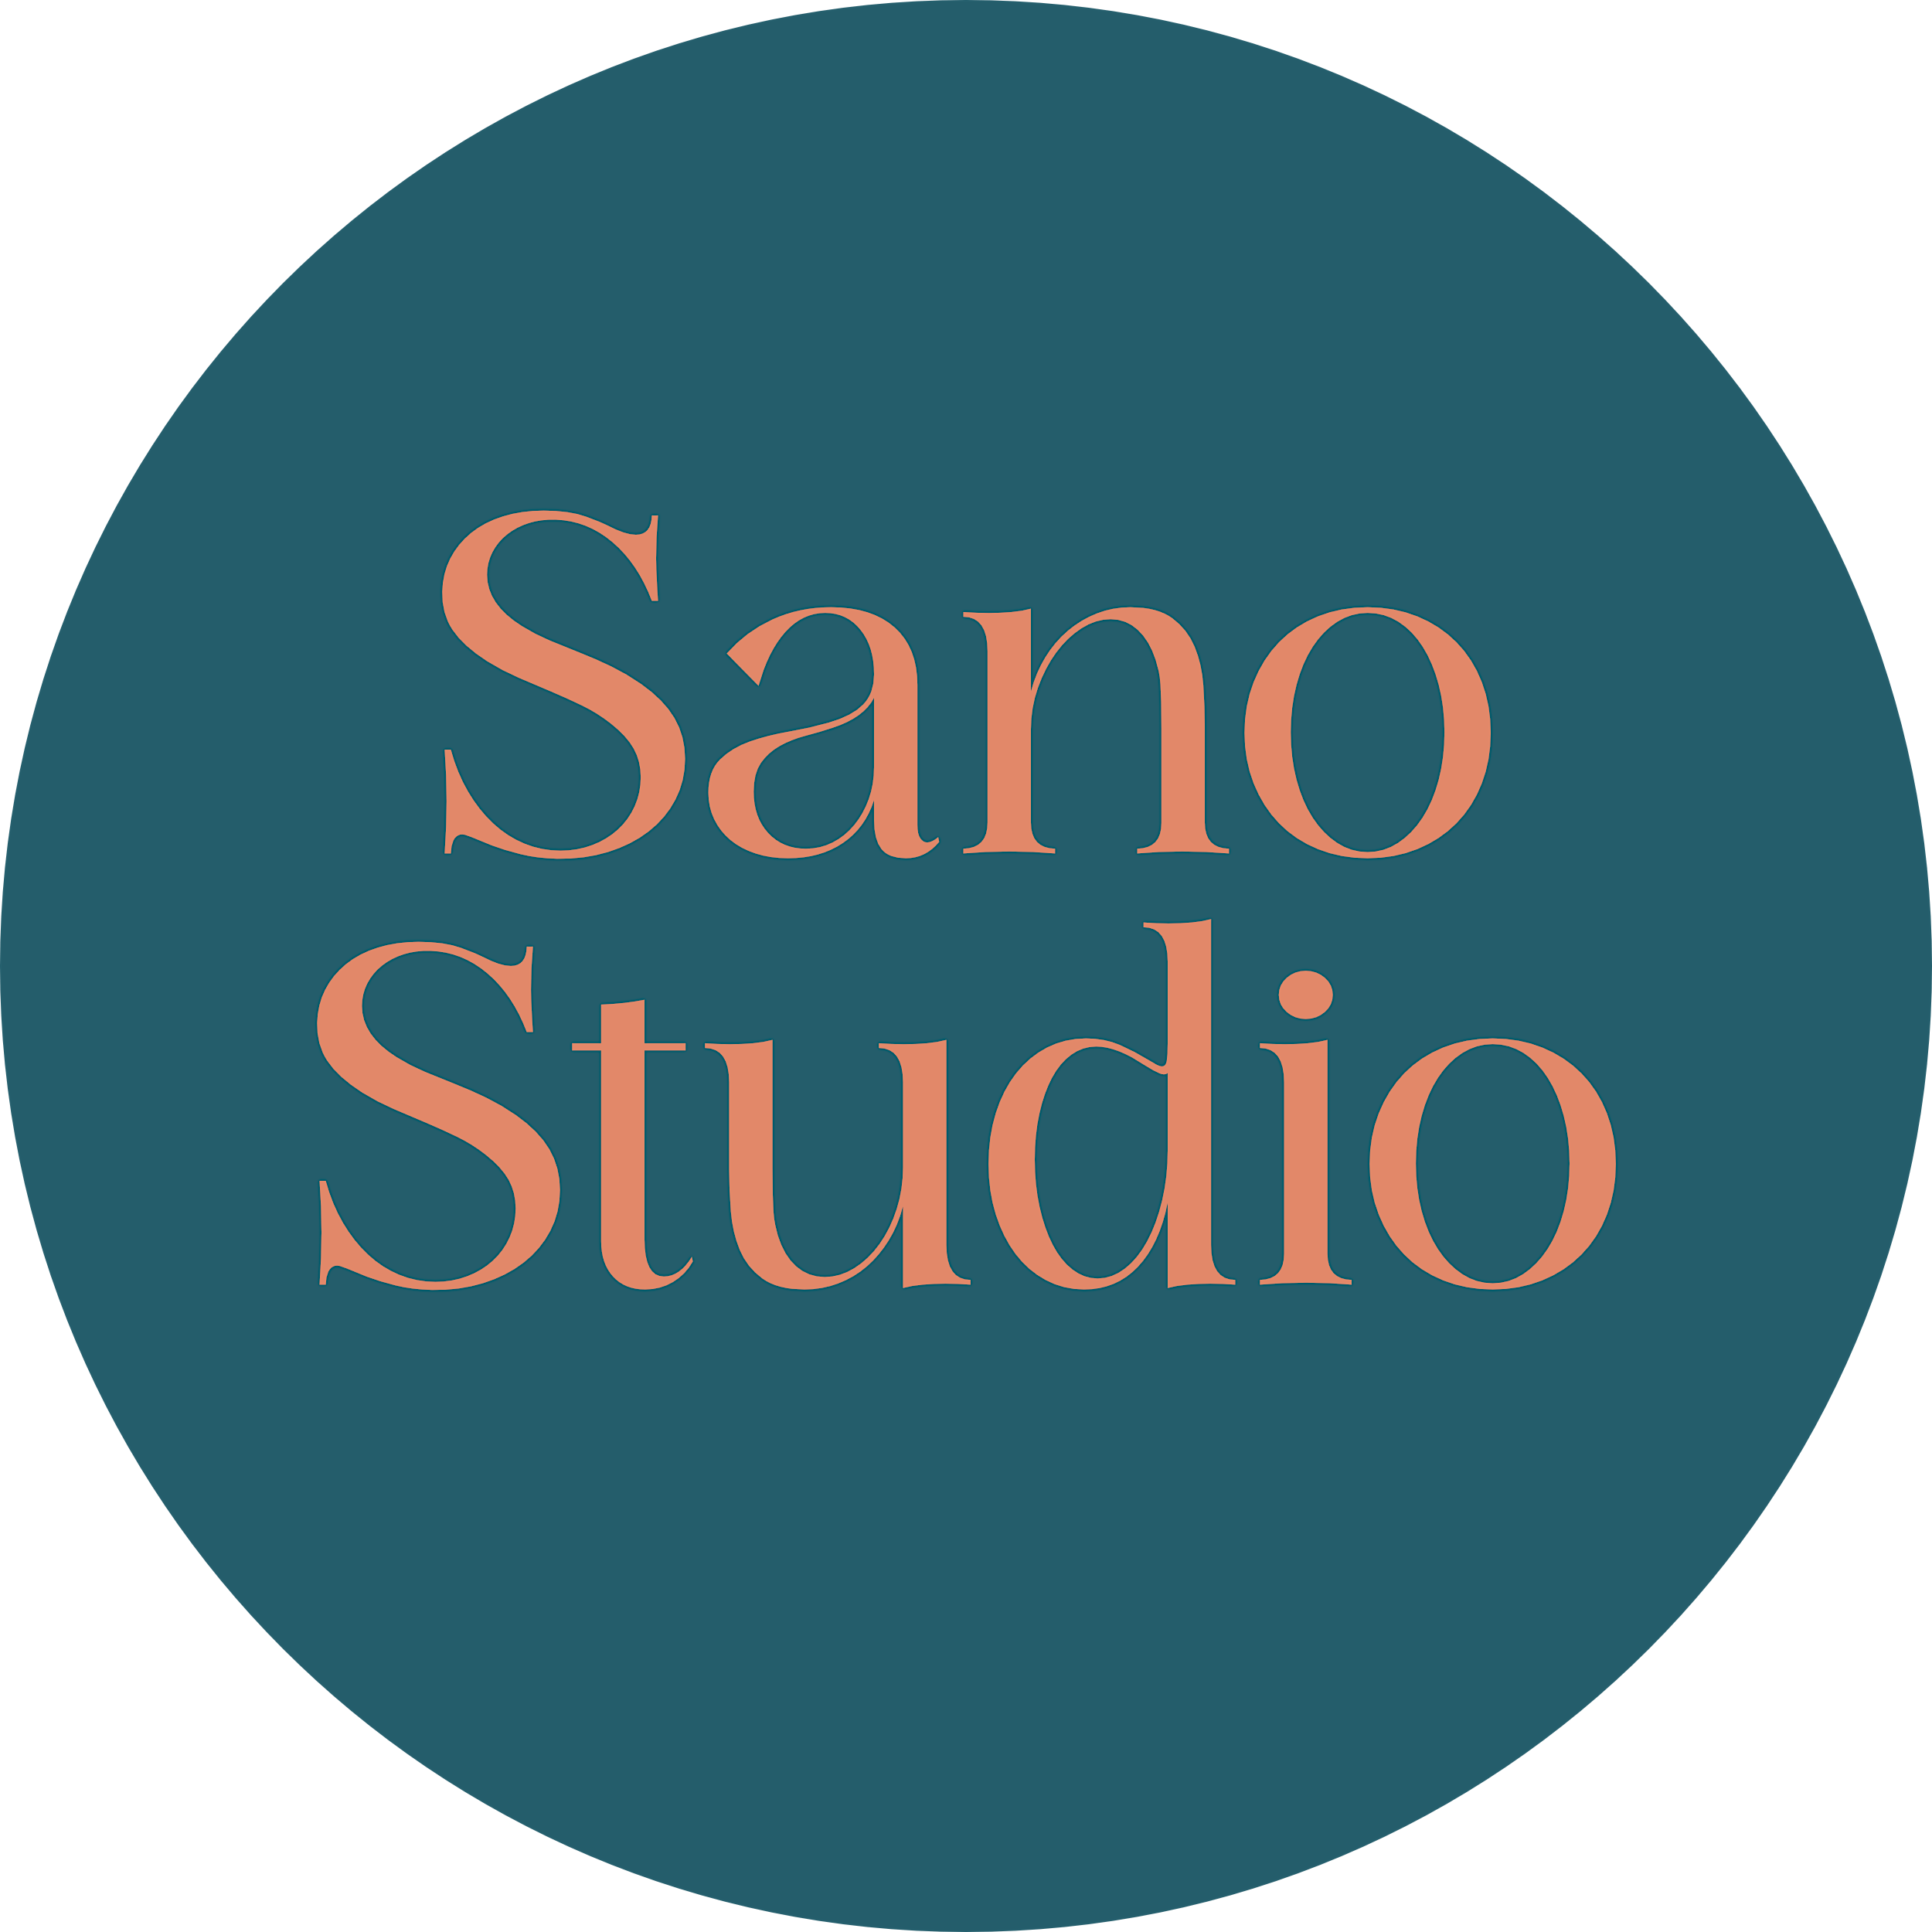 Sano Studio